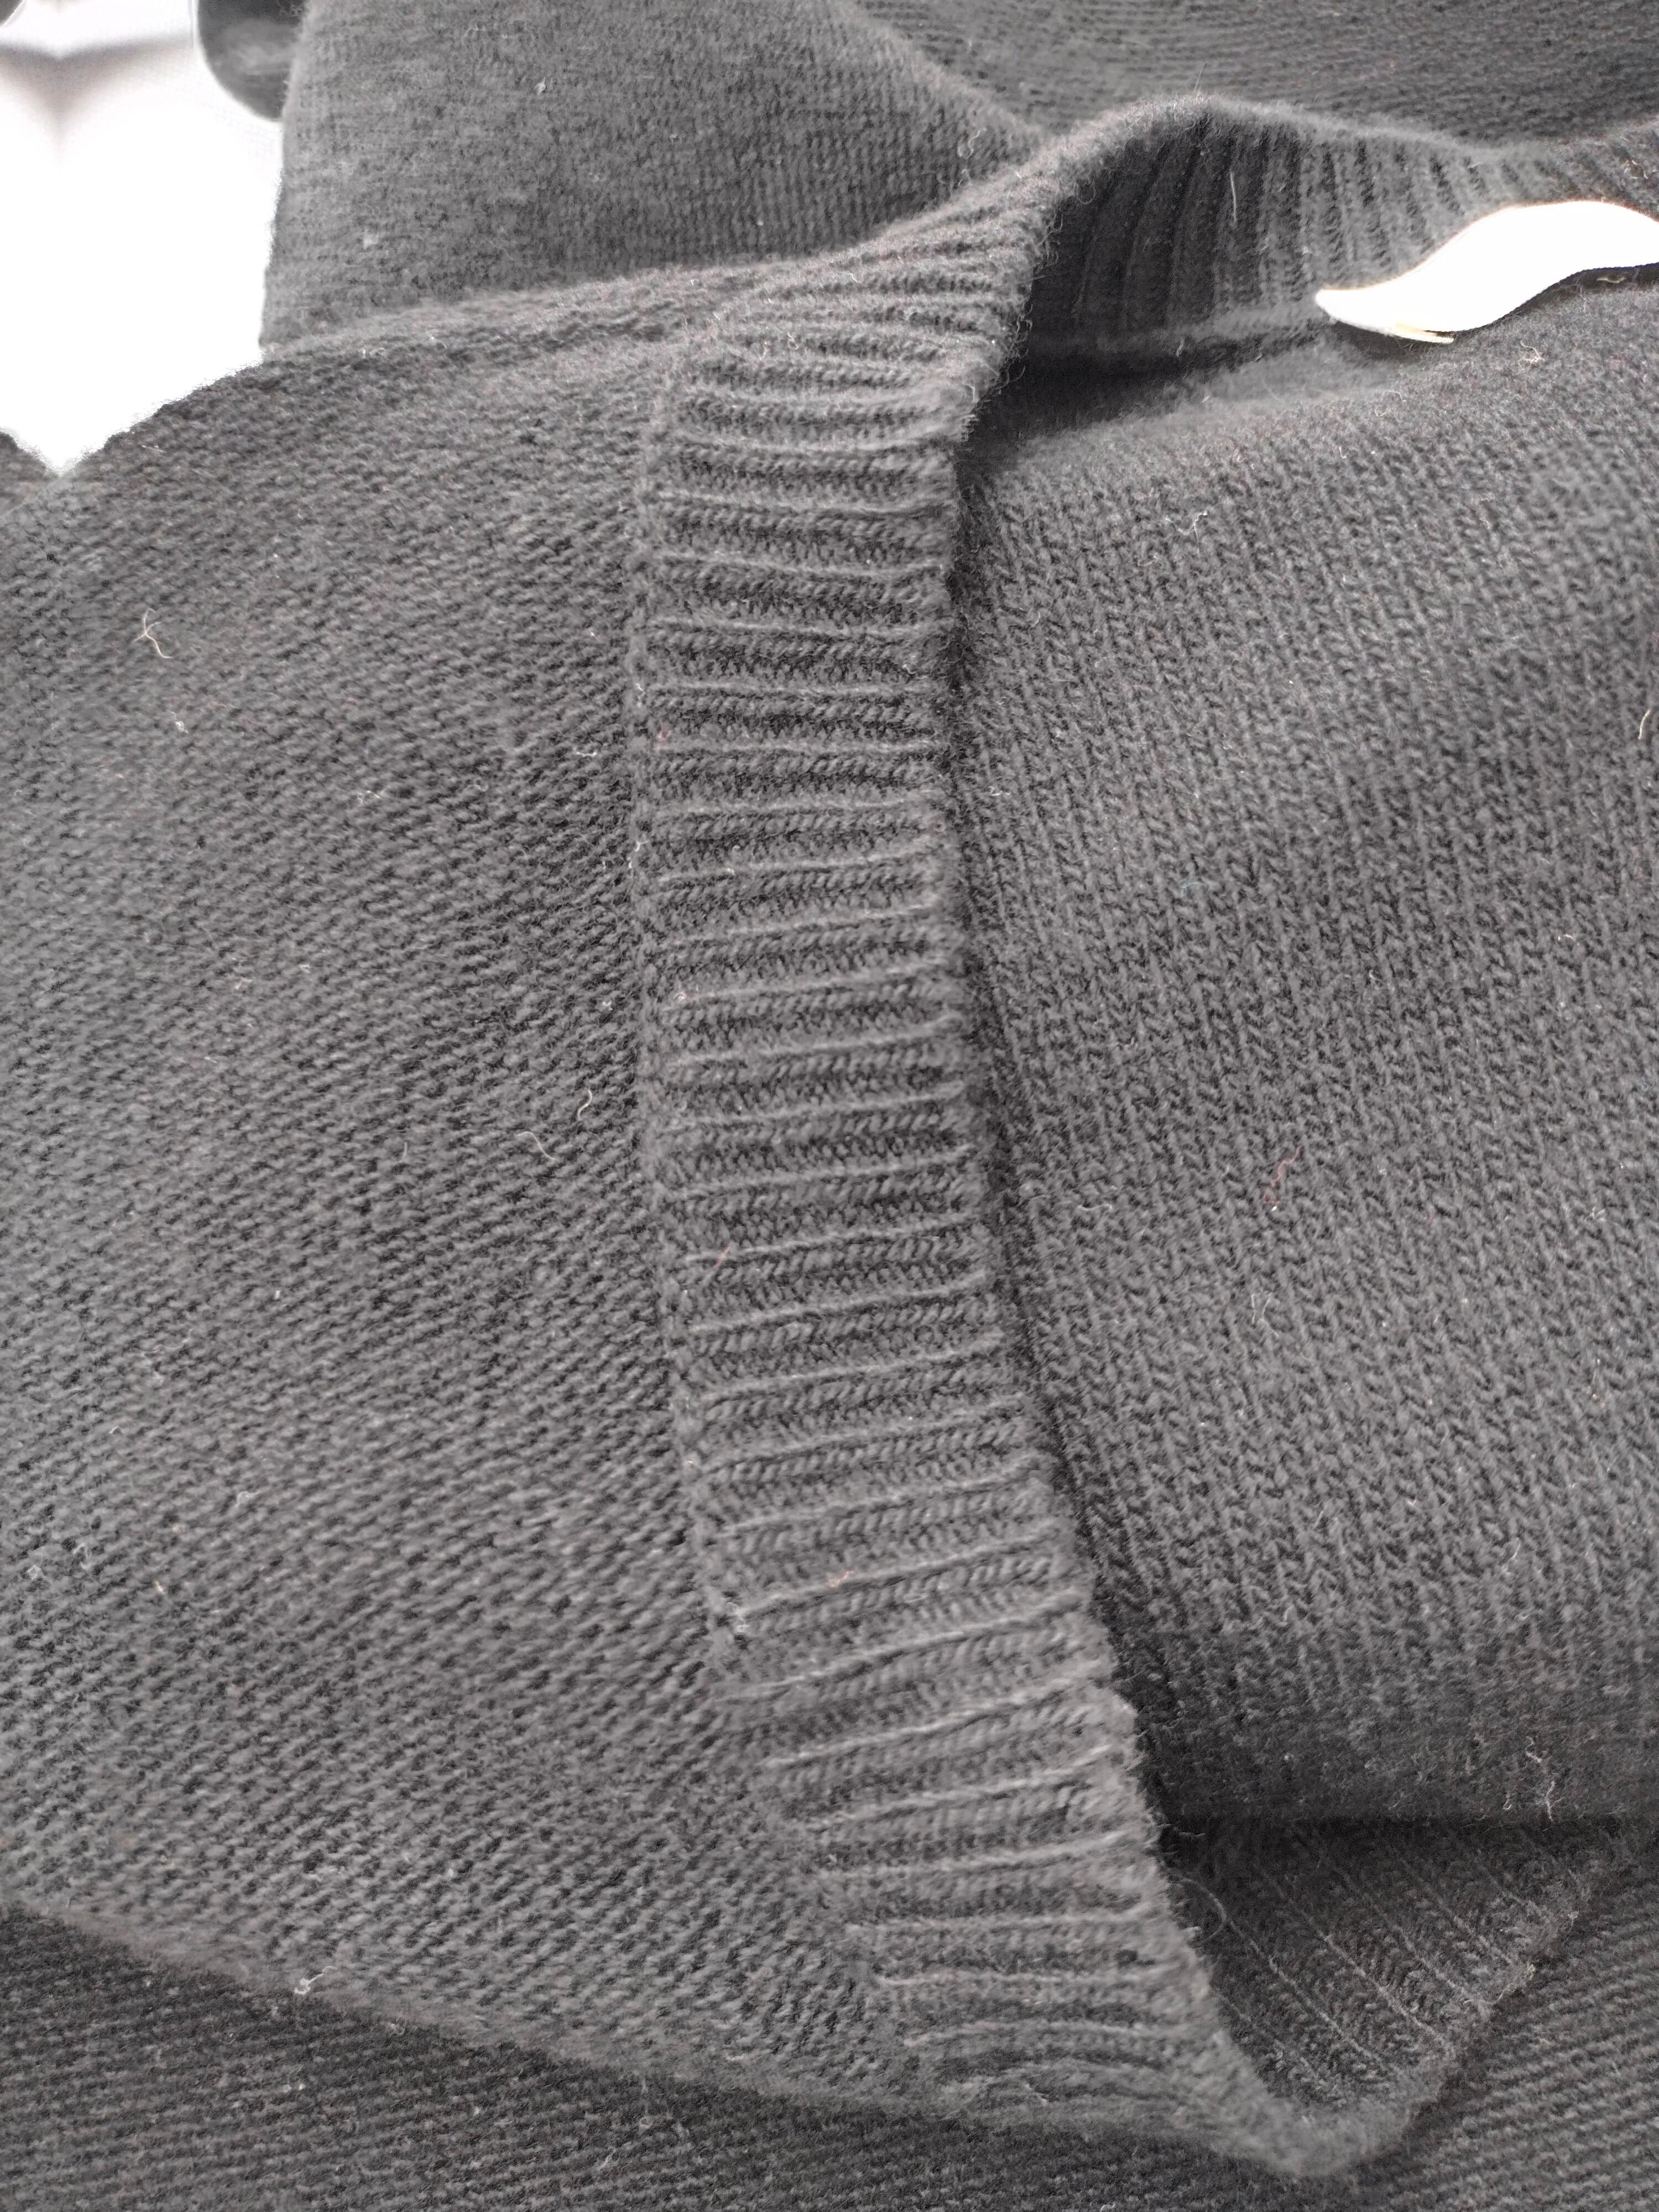 Chloé FALL 2015 RTW runway wool cashmere dress Clare Waight Keller READY-TO-WEAR For Sale 6